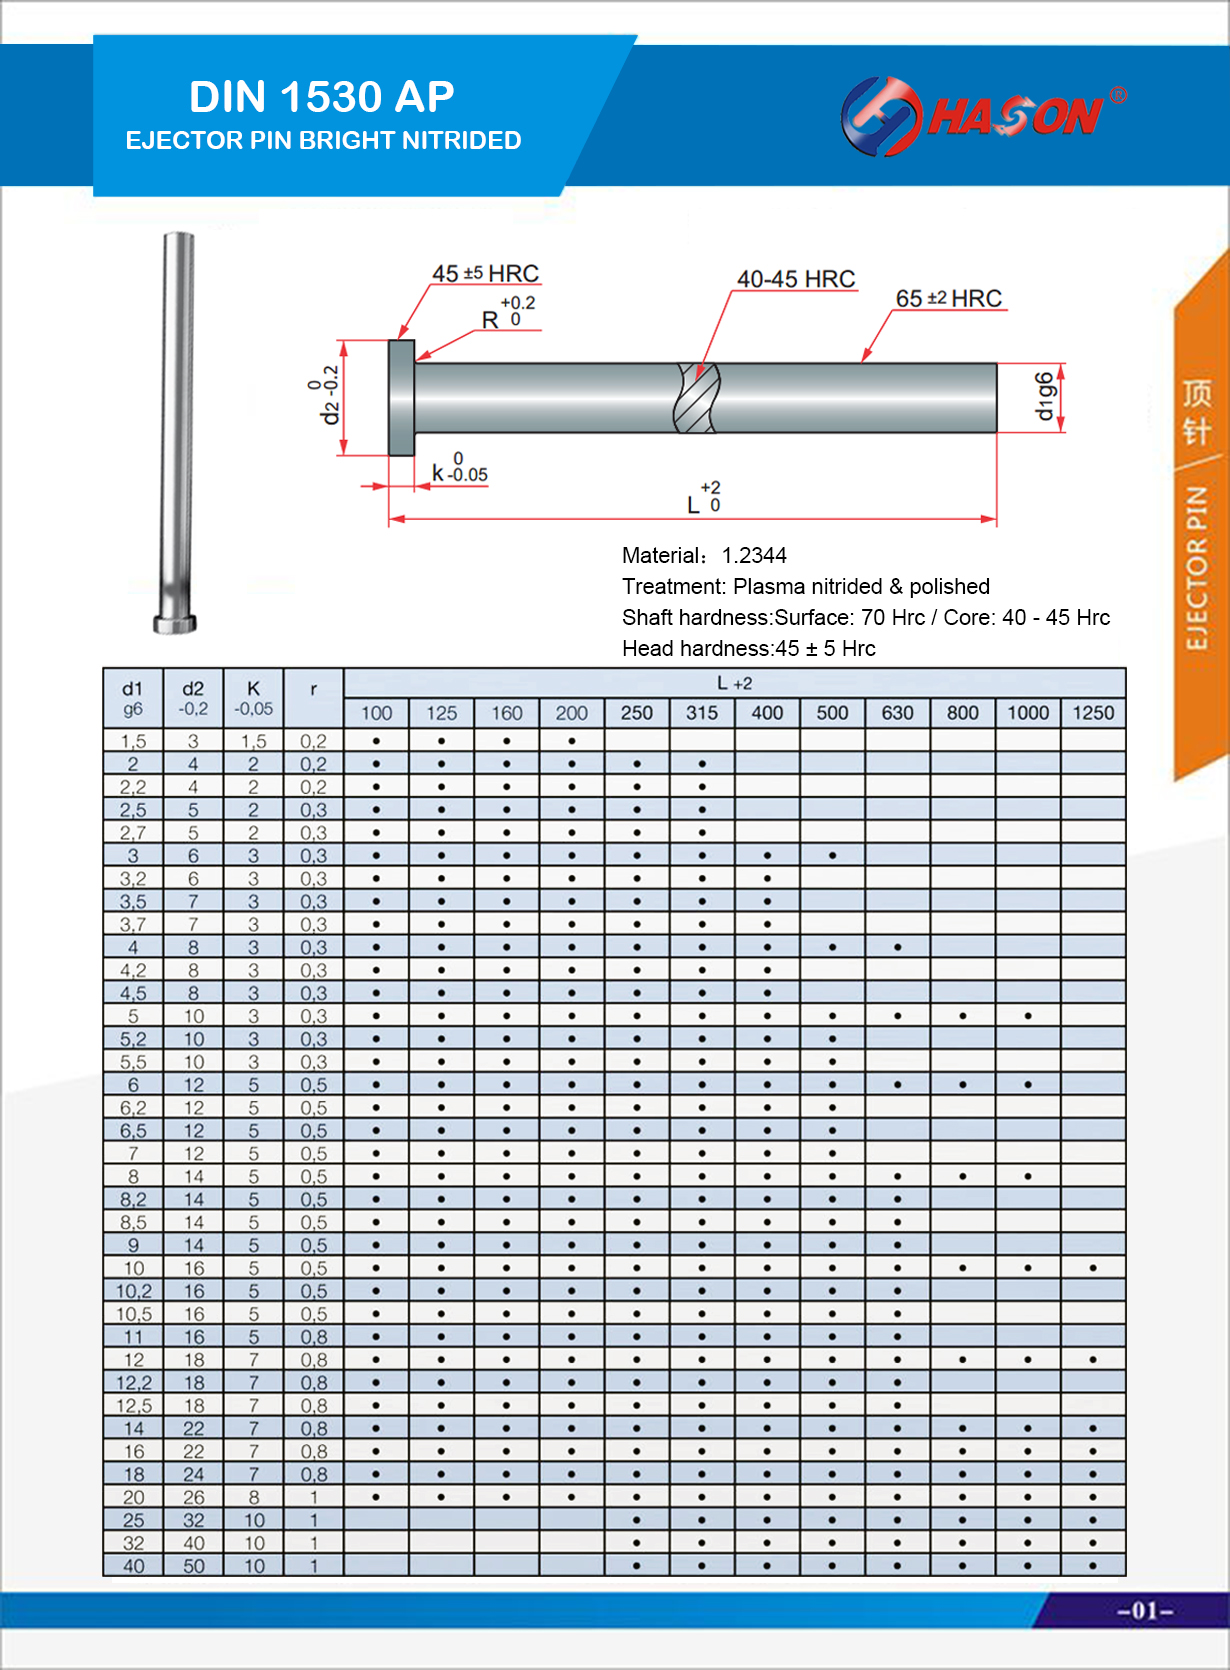 Metric-Nitrided Ejector Pins AP, blank